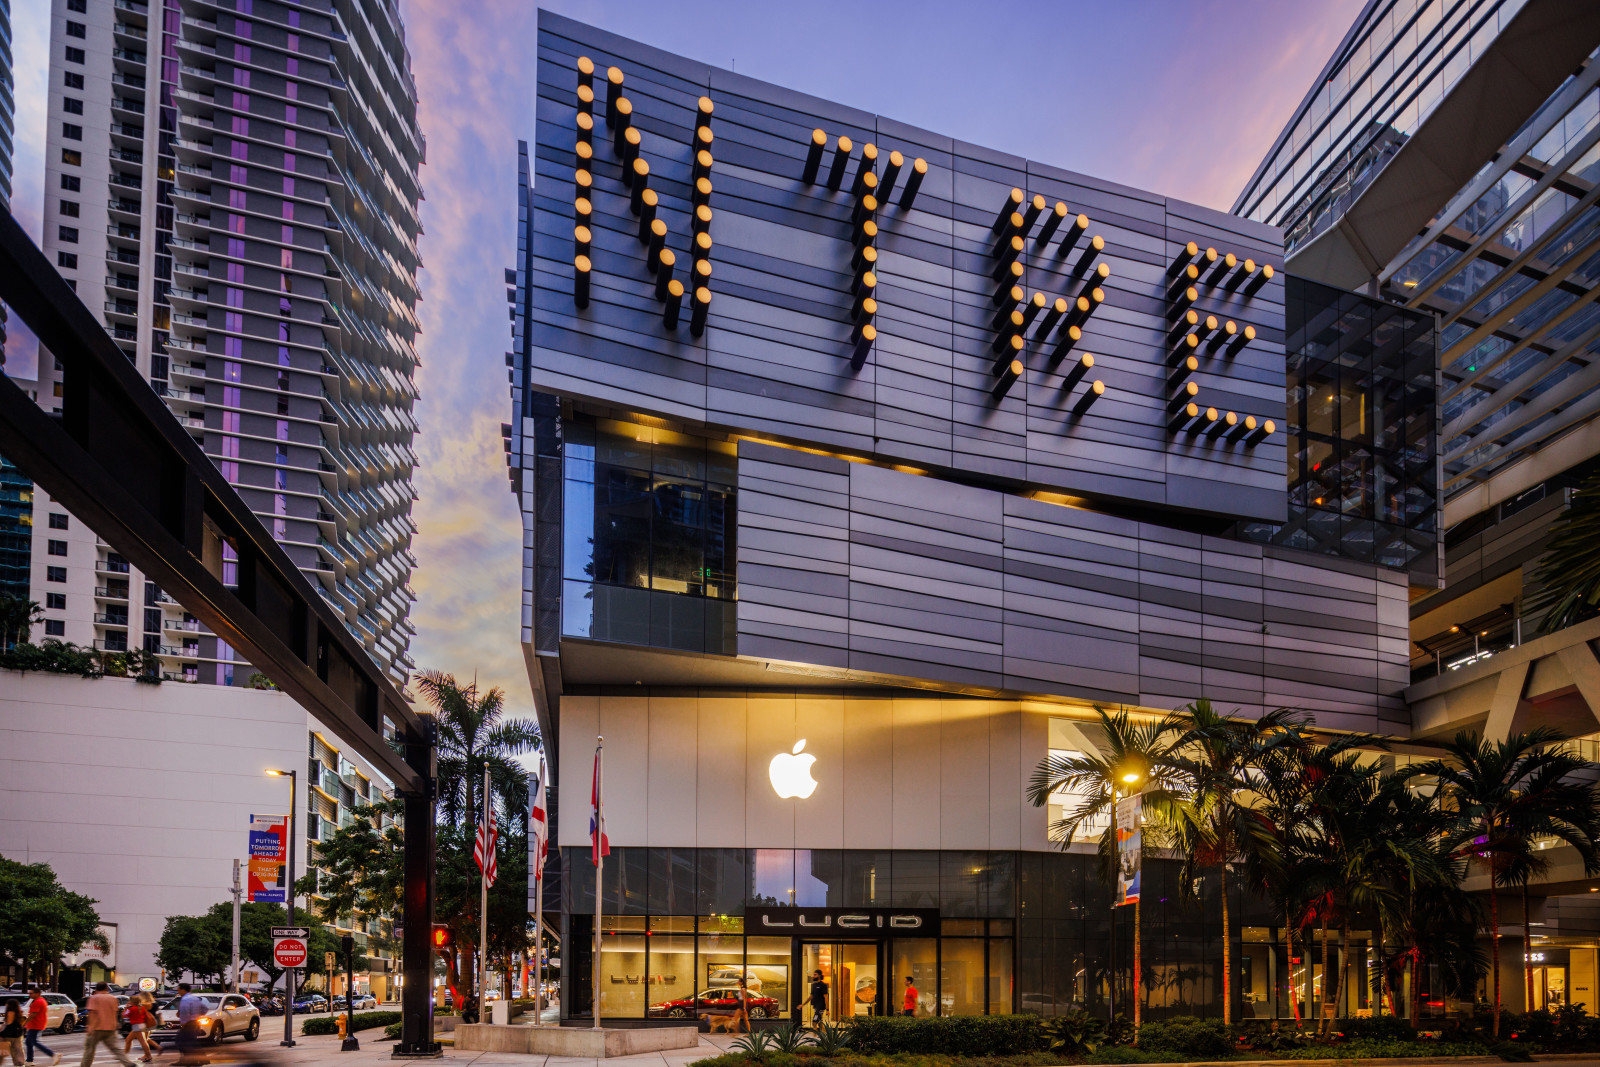 Brickell City Center - The Stylish New Mall in Miami